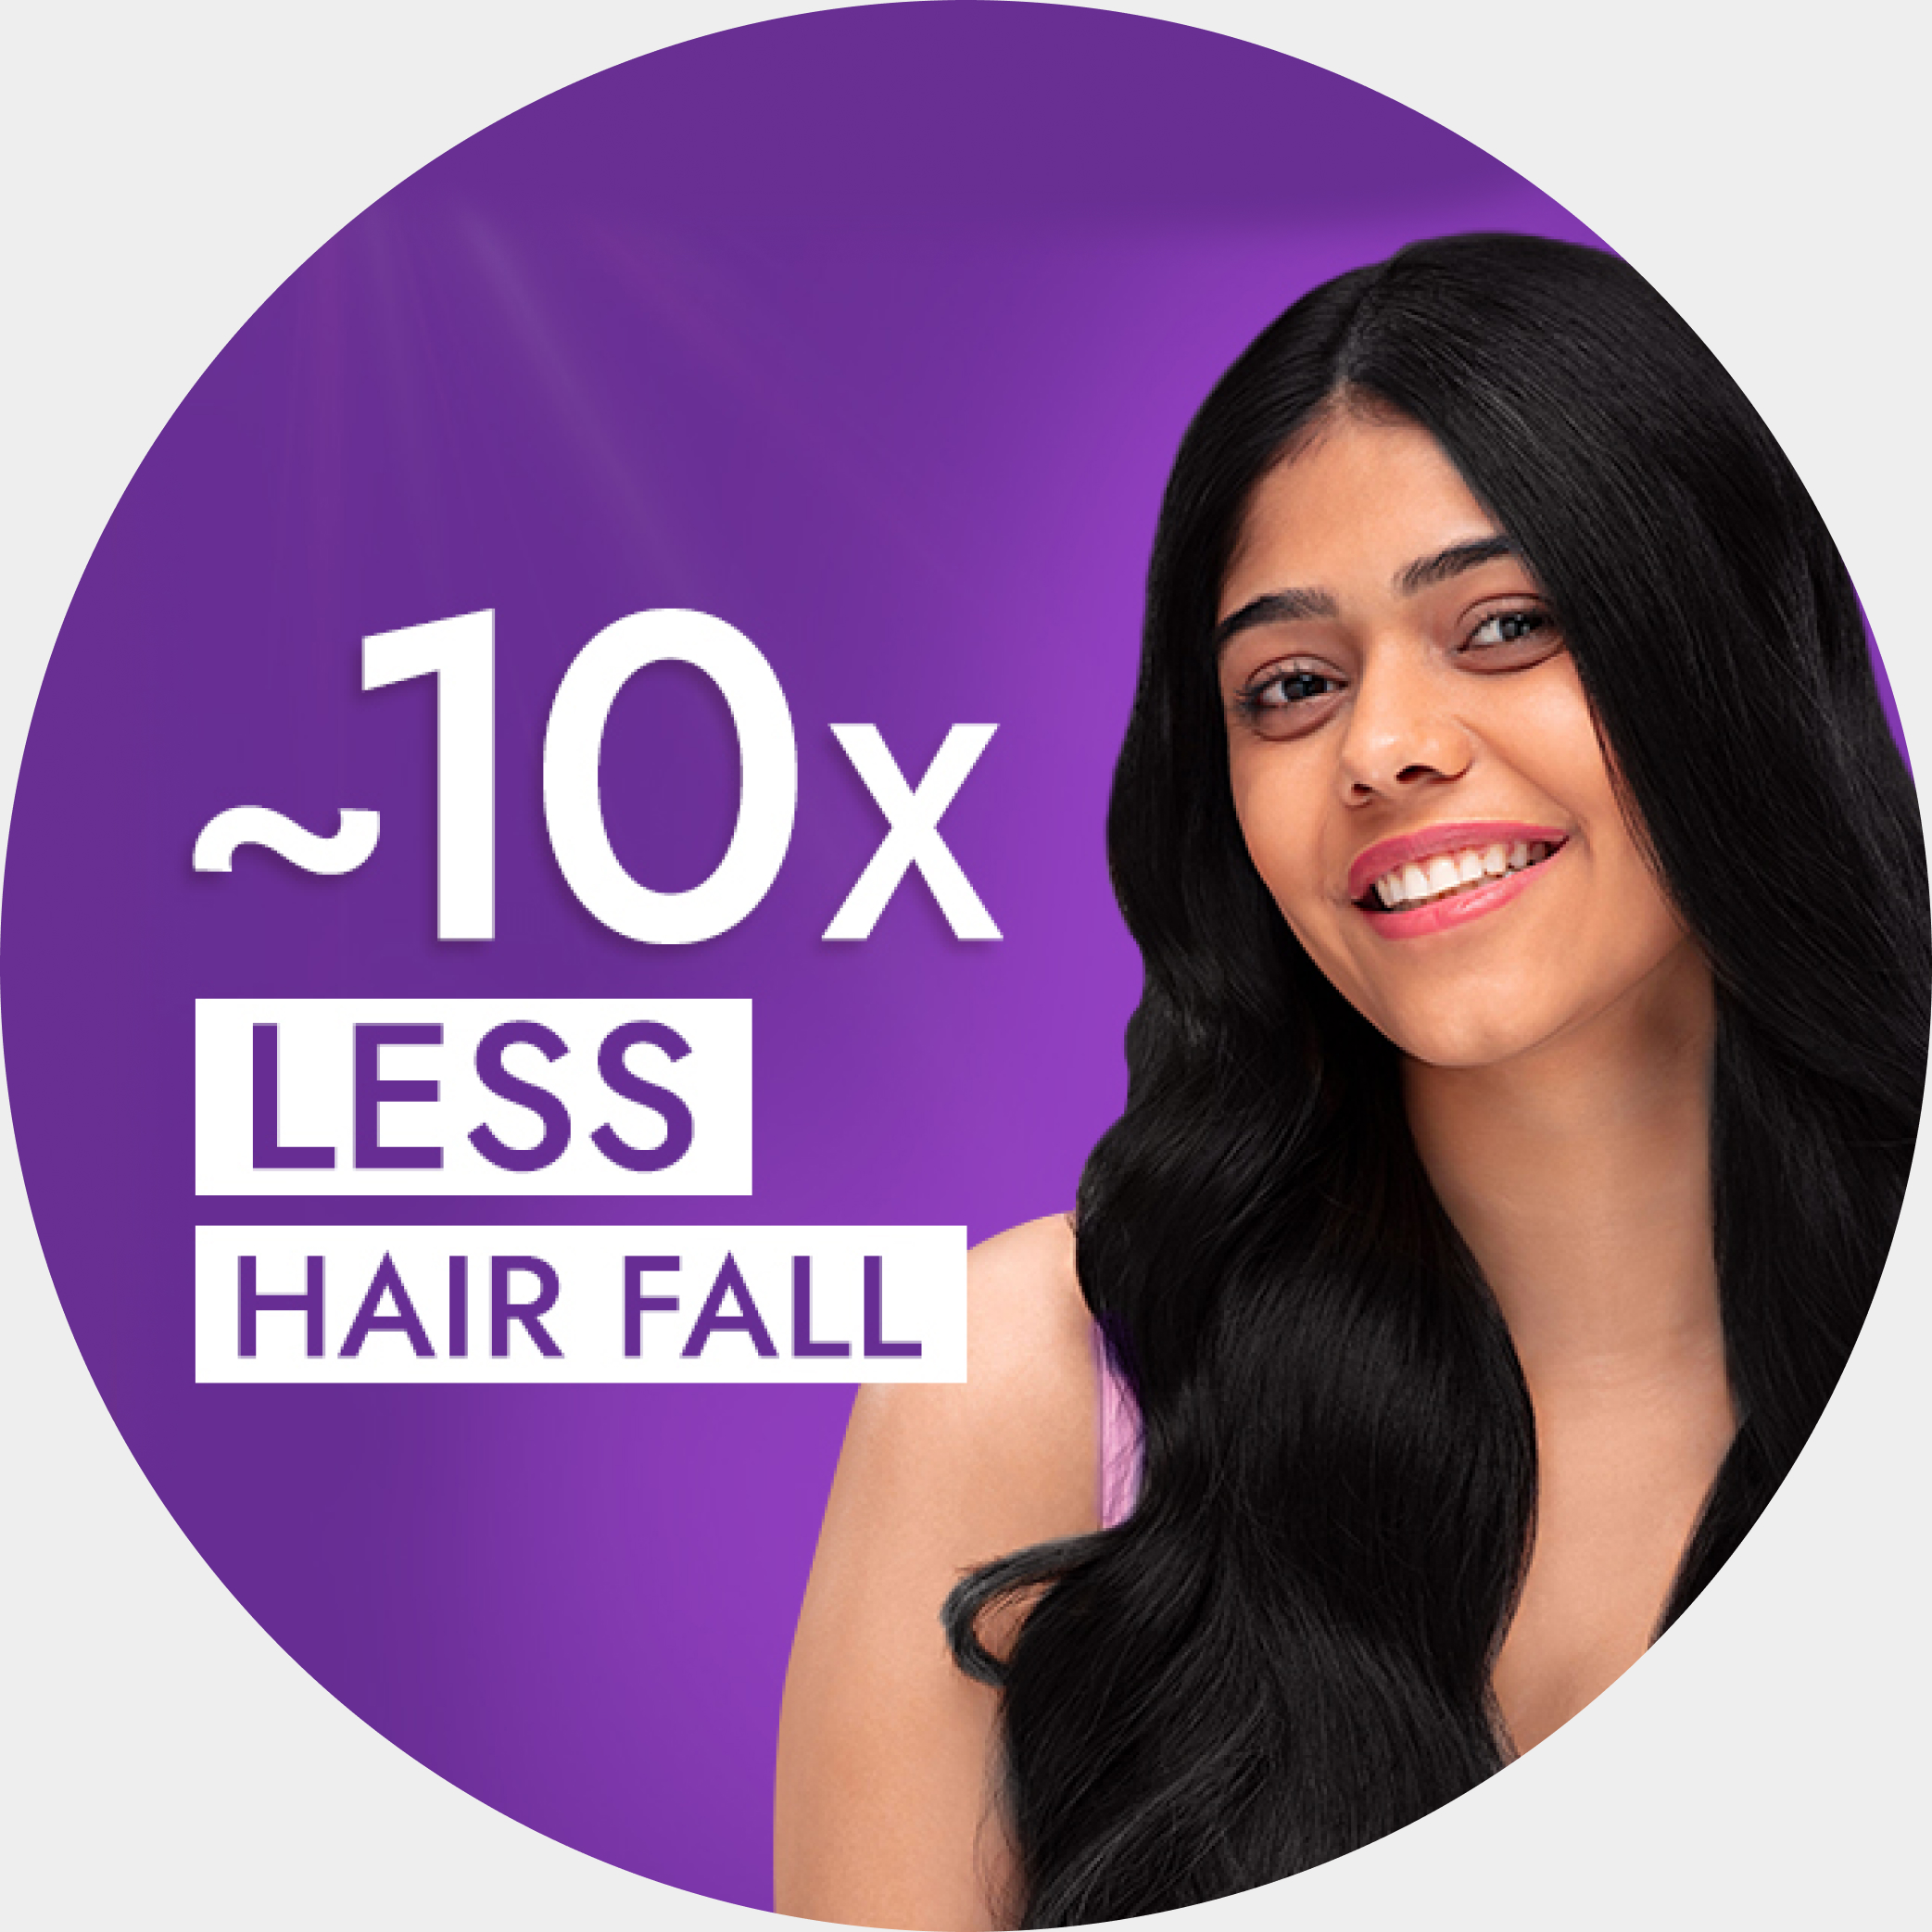 Rosemary Oil Benefits - Less Hairfall